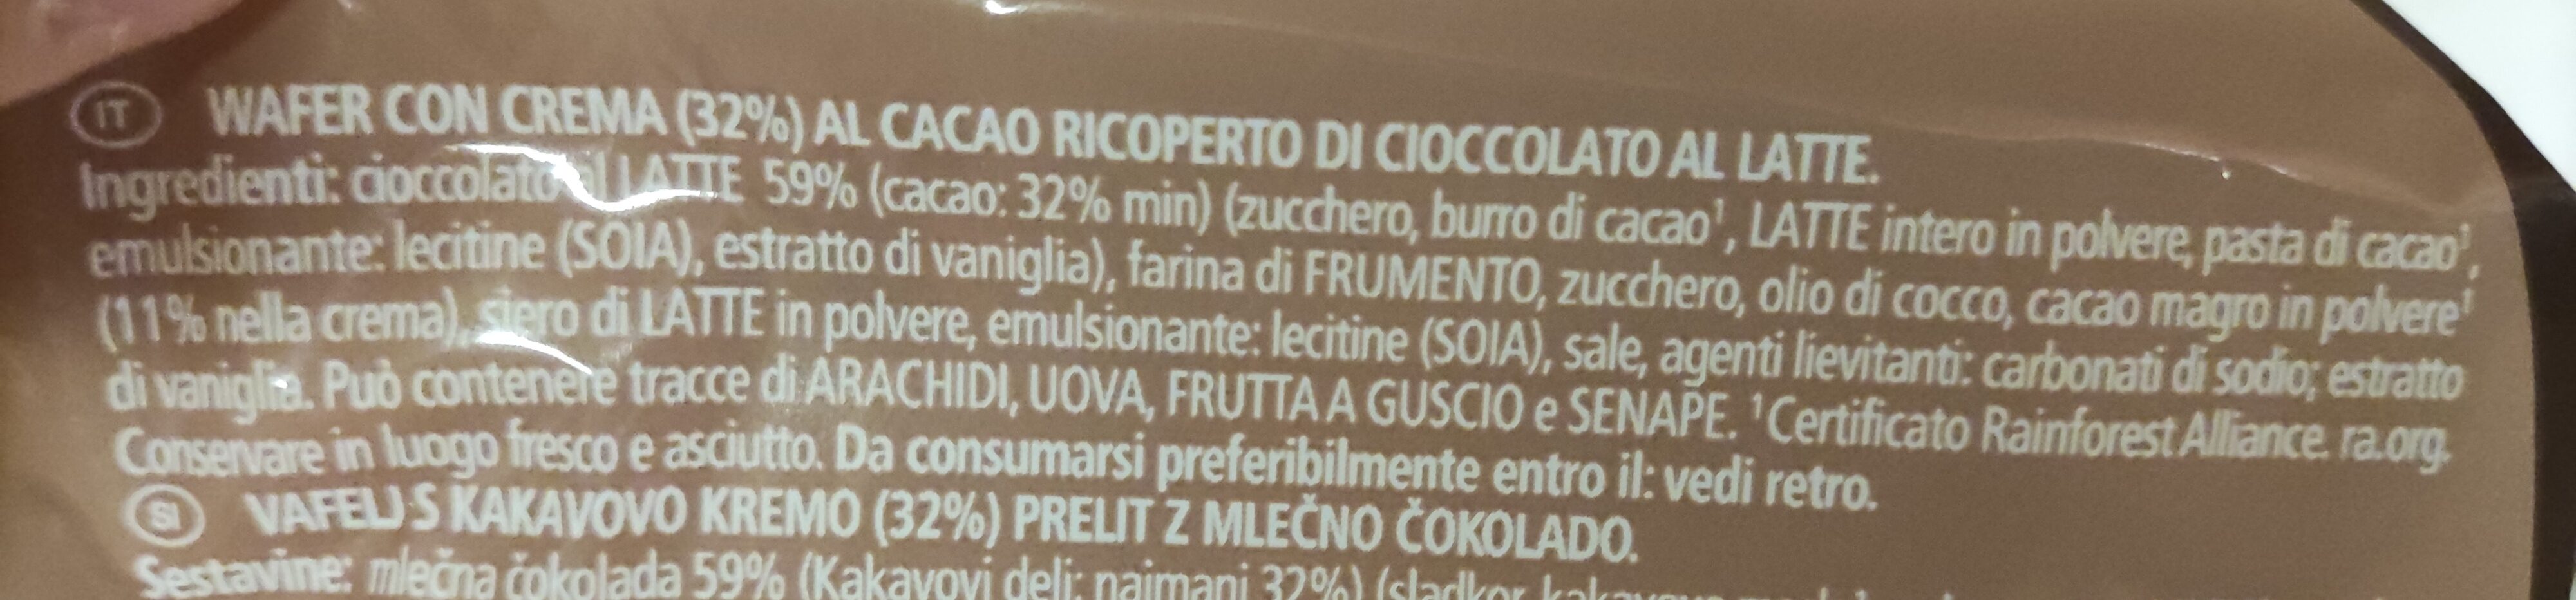 Choco wafer - Ingredients - it